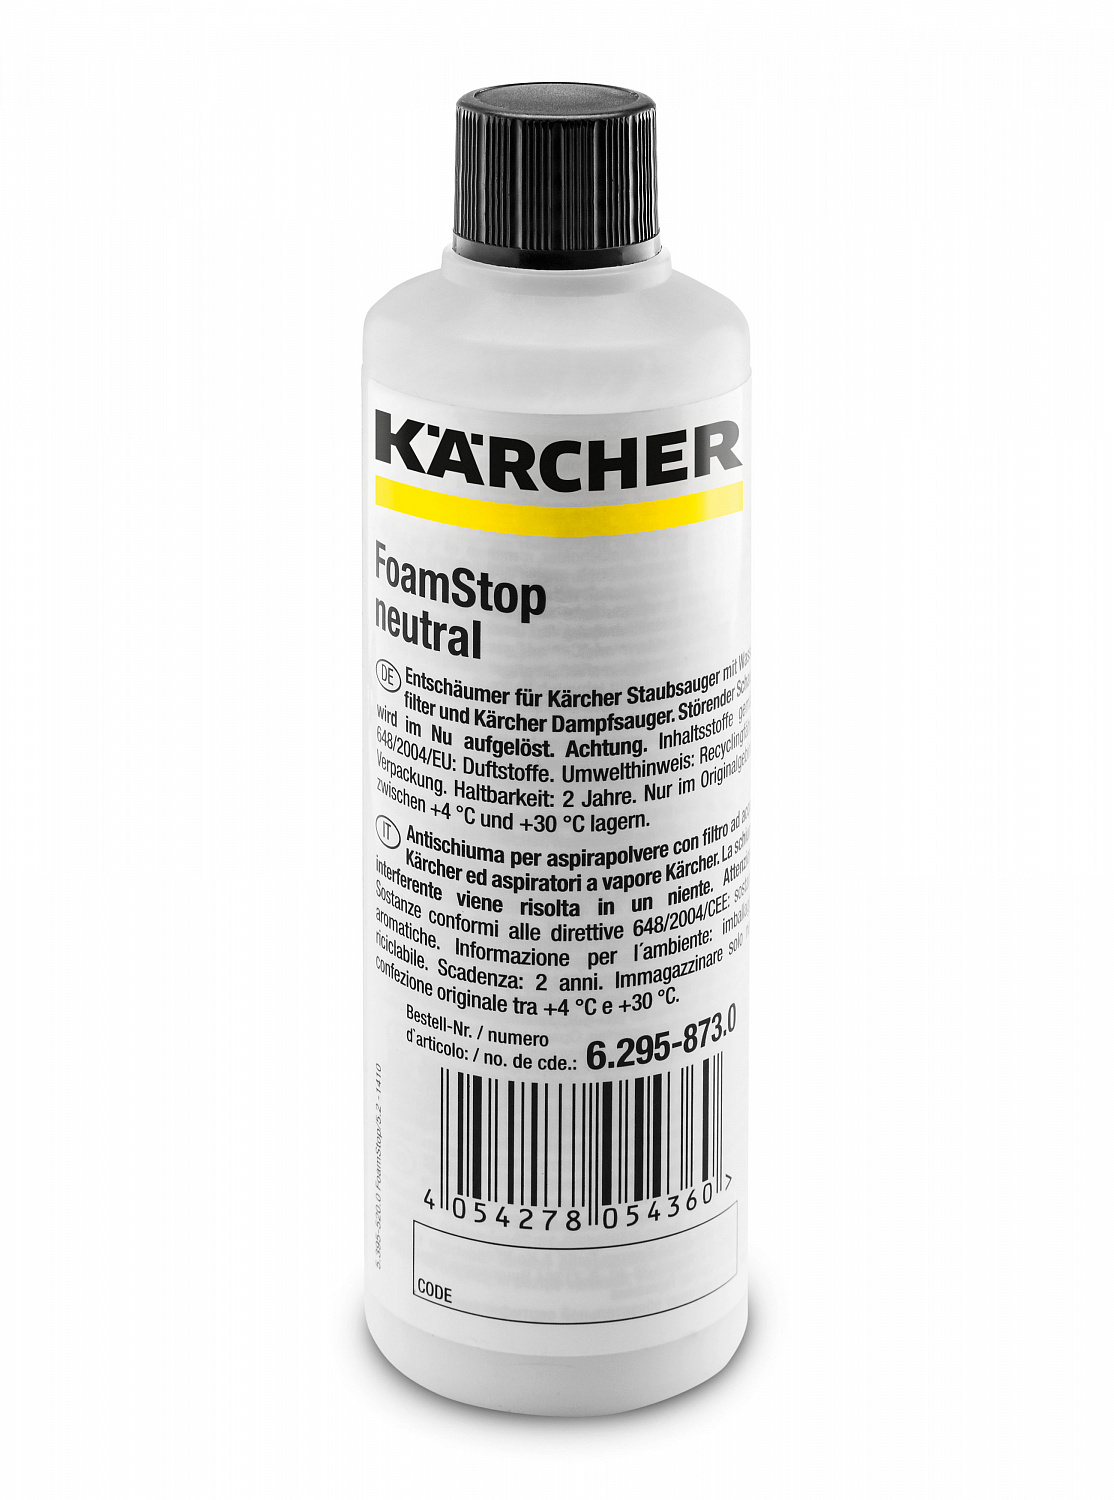 Пеногаситель Karcher FoamStop neutral (125мл) (6.295-873.0) 